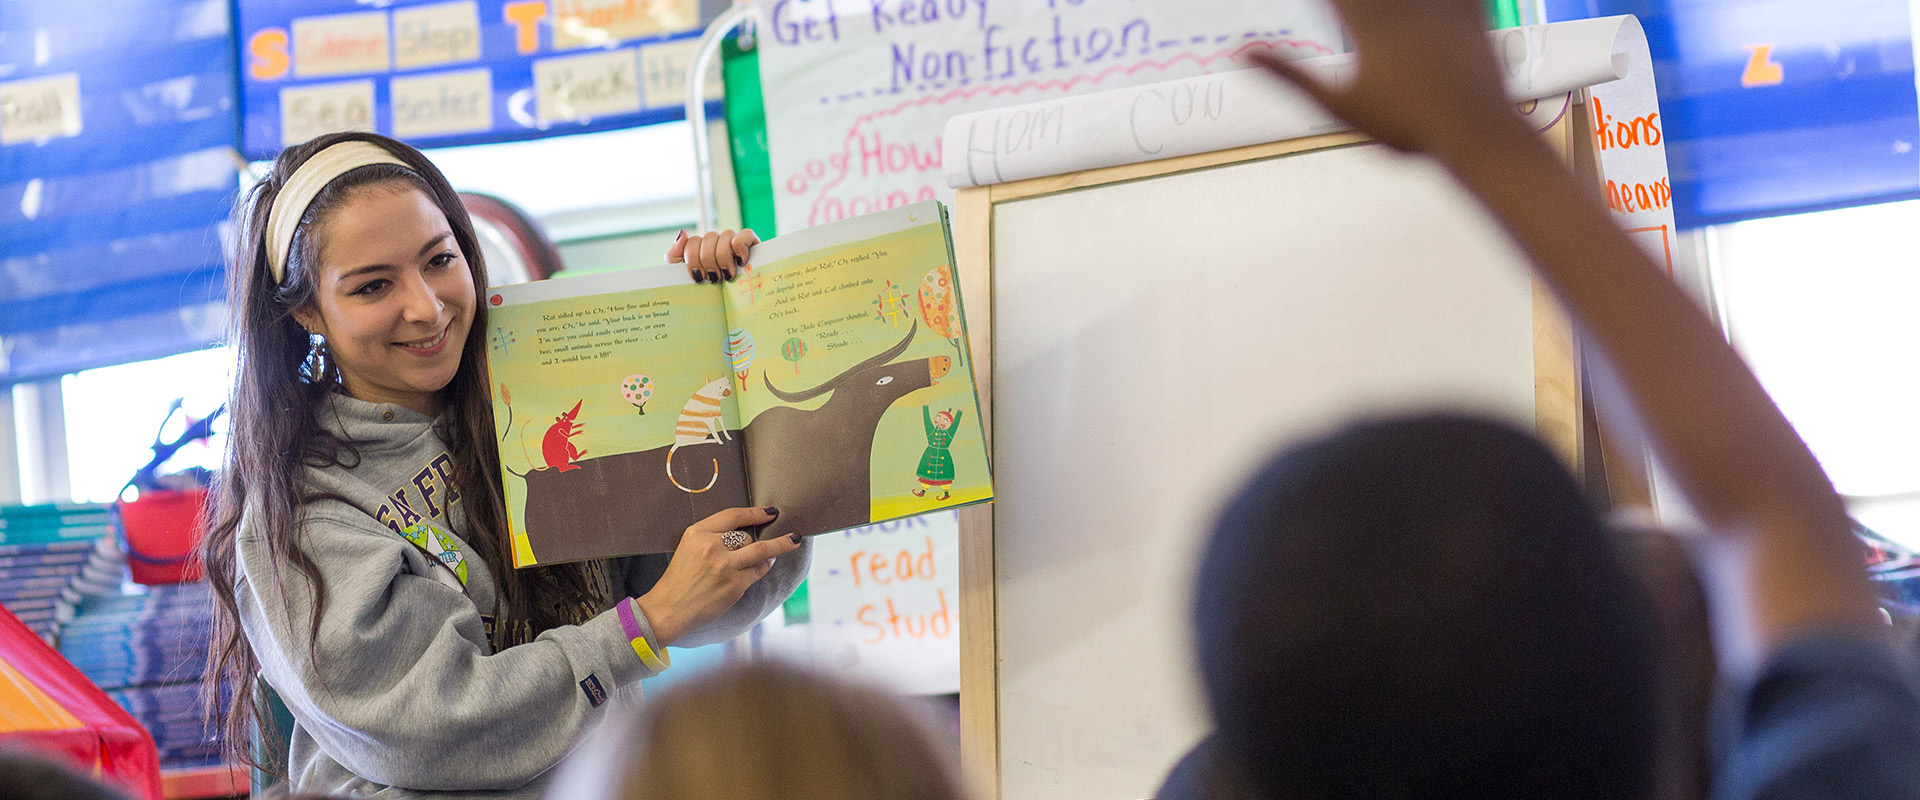 Teacher reads a book to a classroom of children. A student raises his hand.